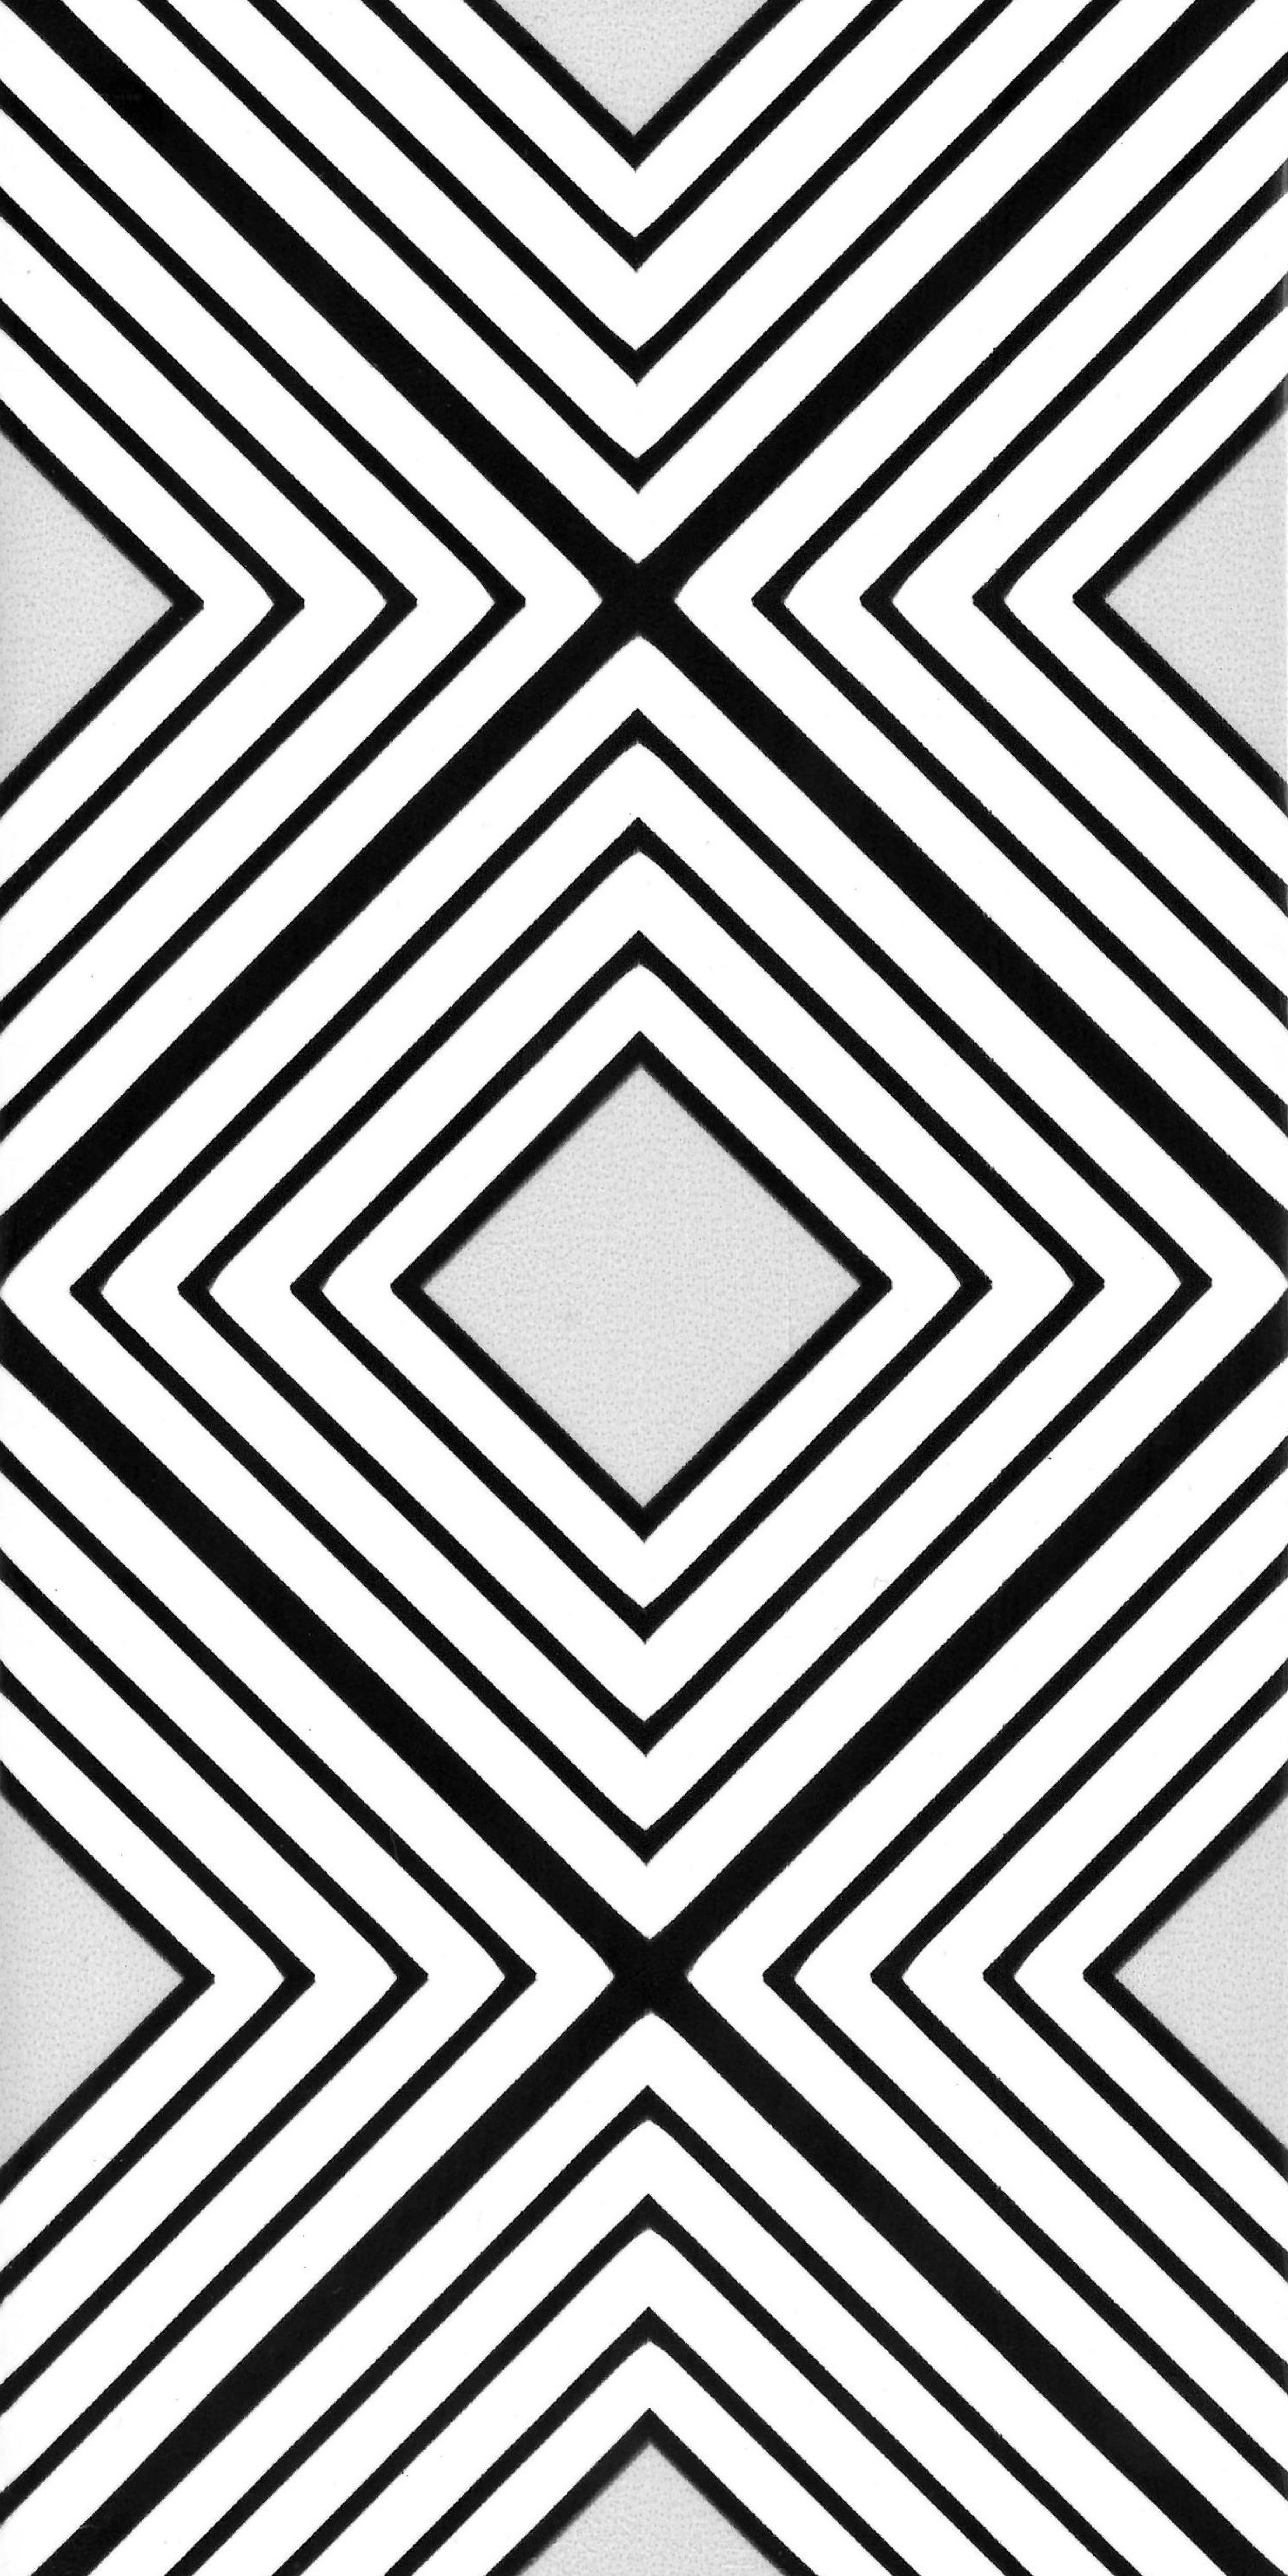 Monochrome Black & white Gloss Patterned Ceramic Wall Tile, Pack of 50, (L)200mm (W)100mm